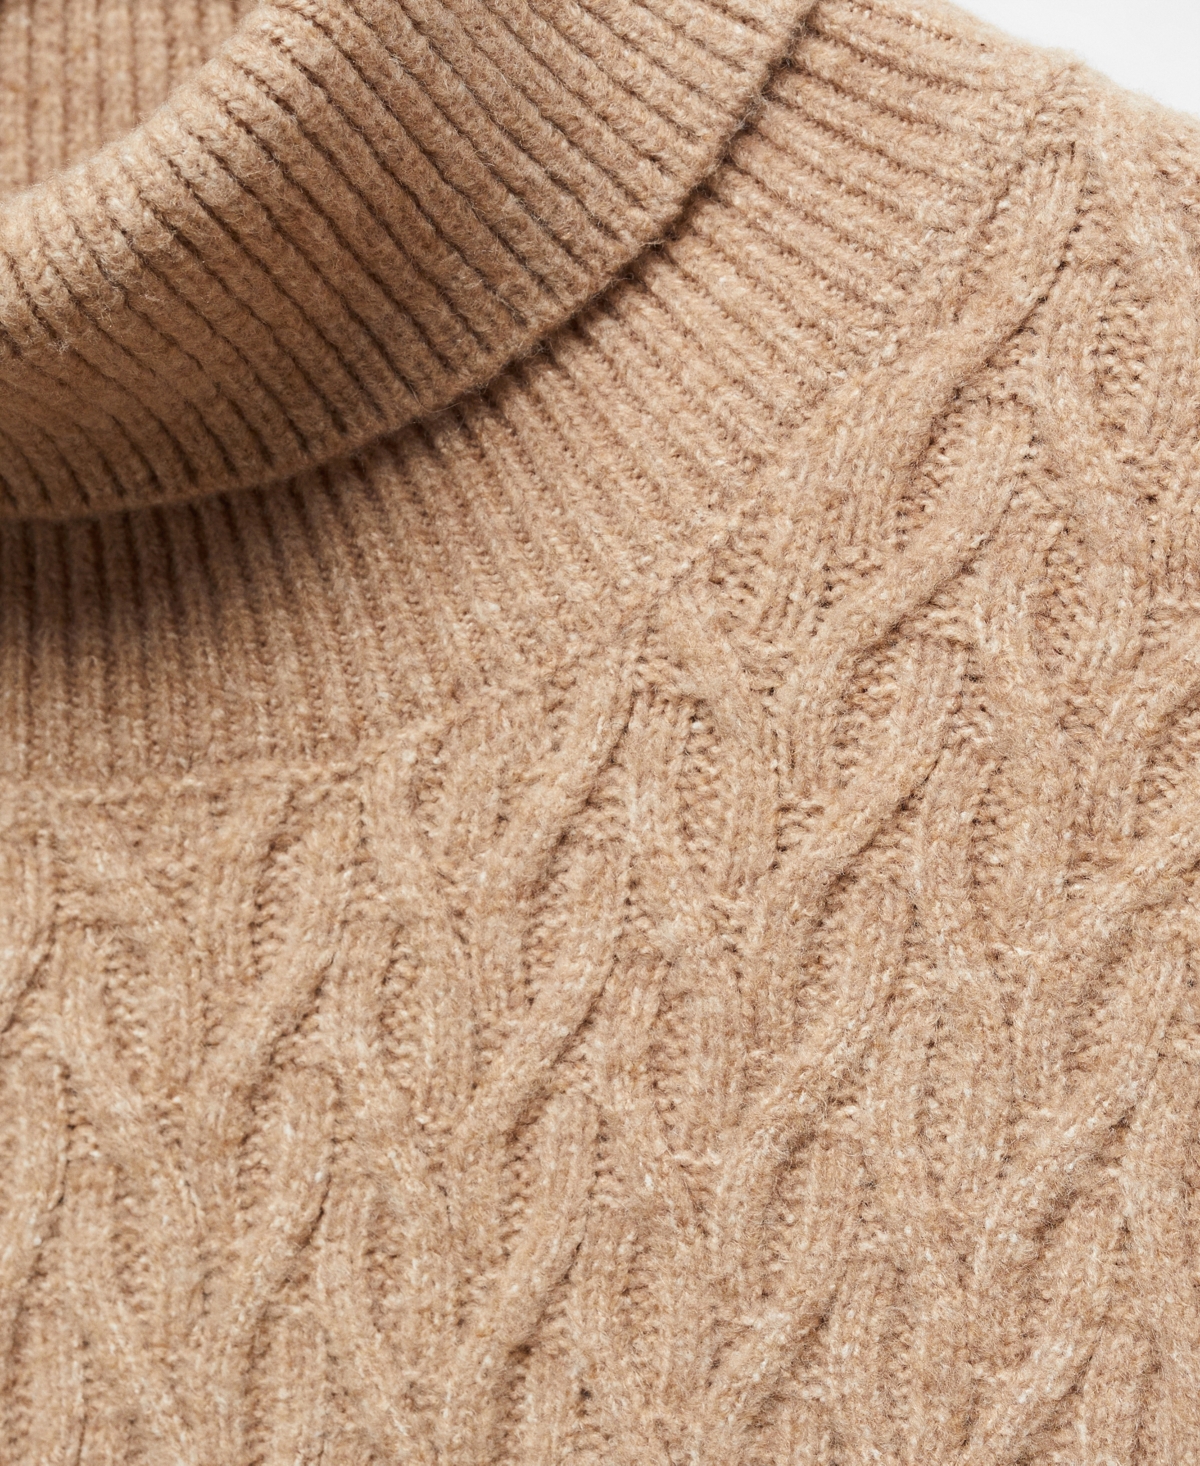 Shop Mango Men's Braided Turtleneck Sweater In Medium Brown